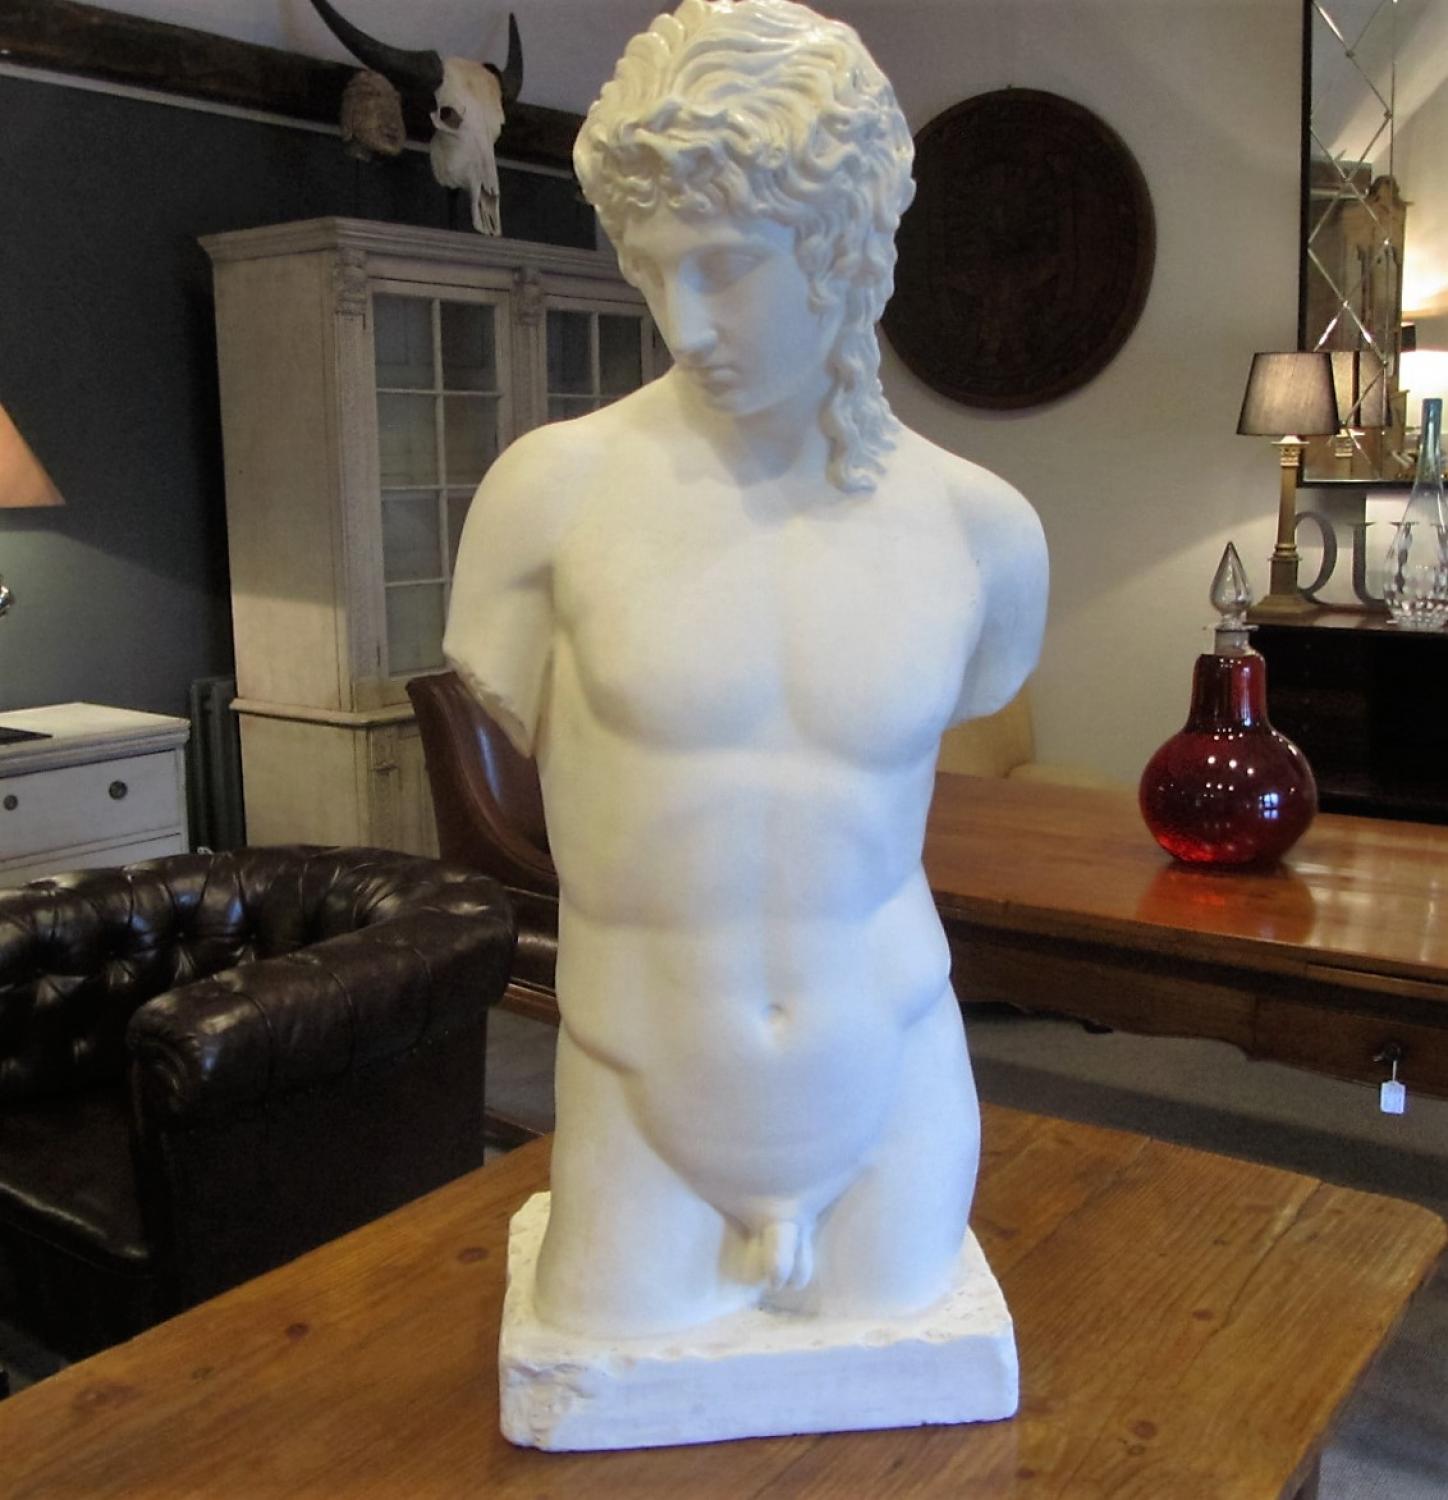 A plaster sculpture of Adonis